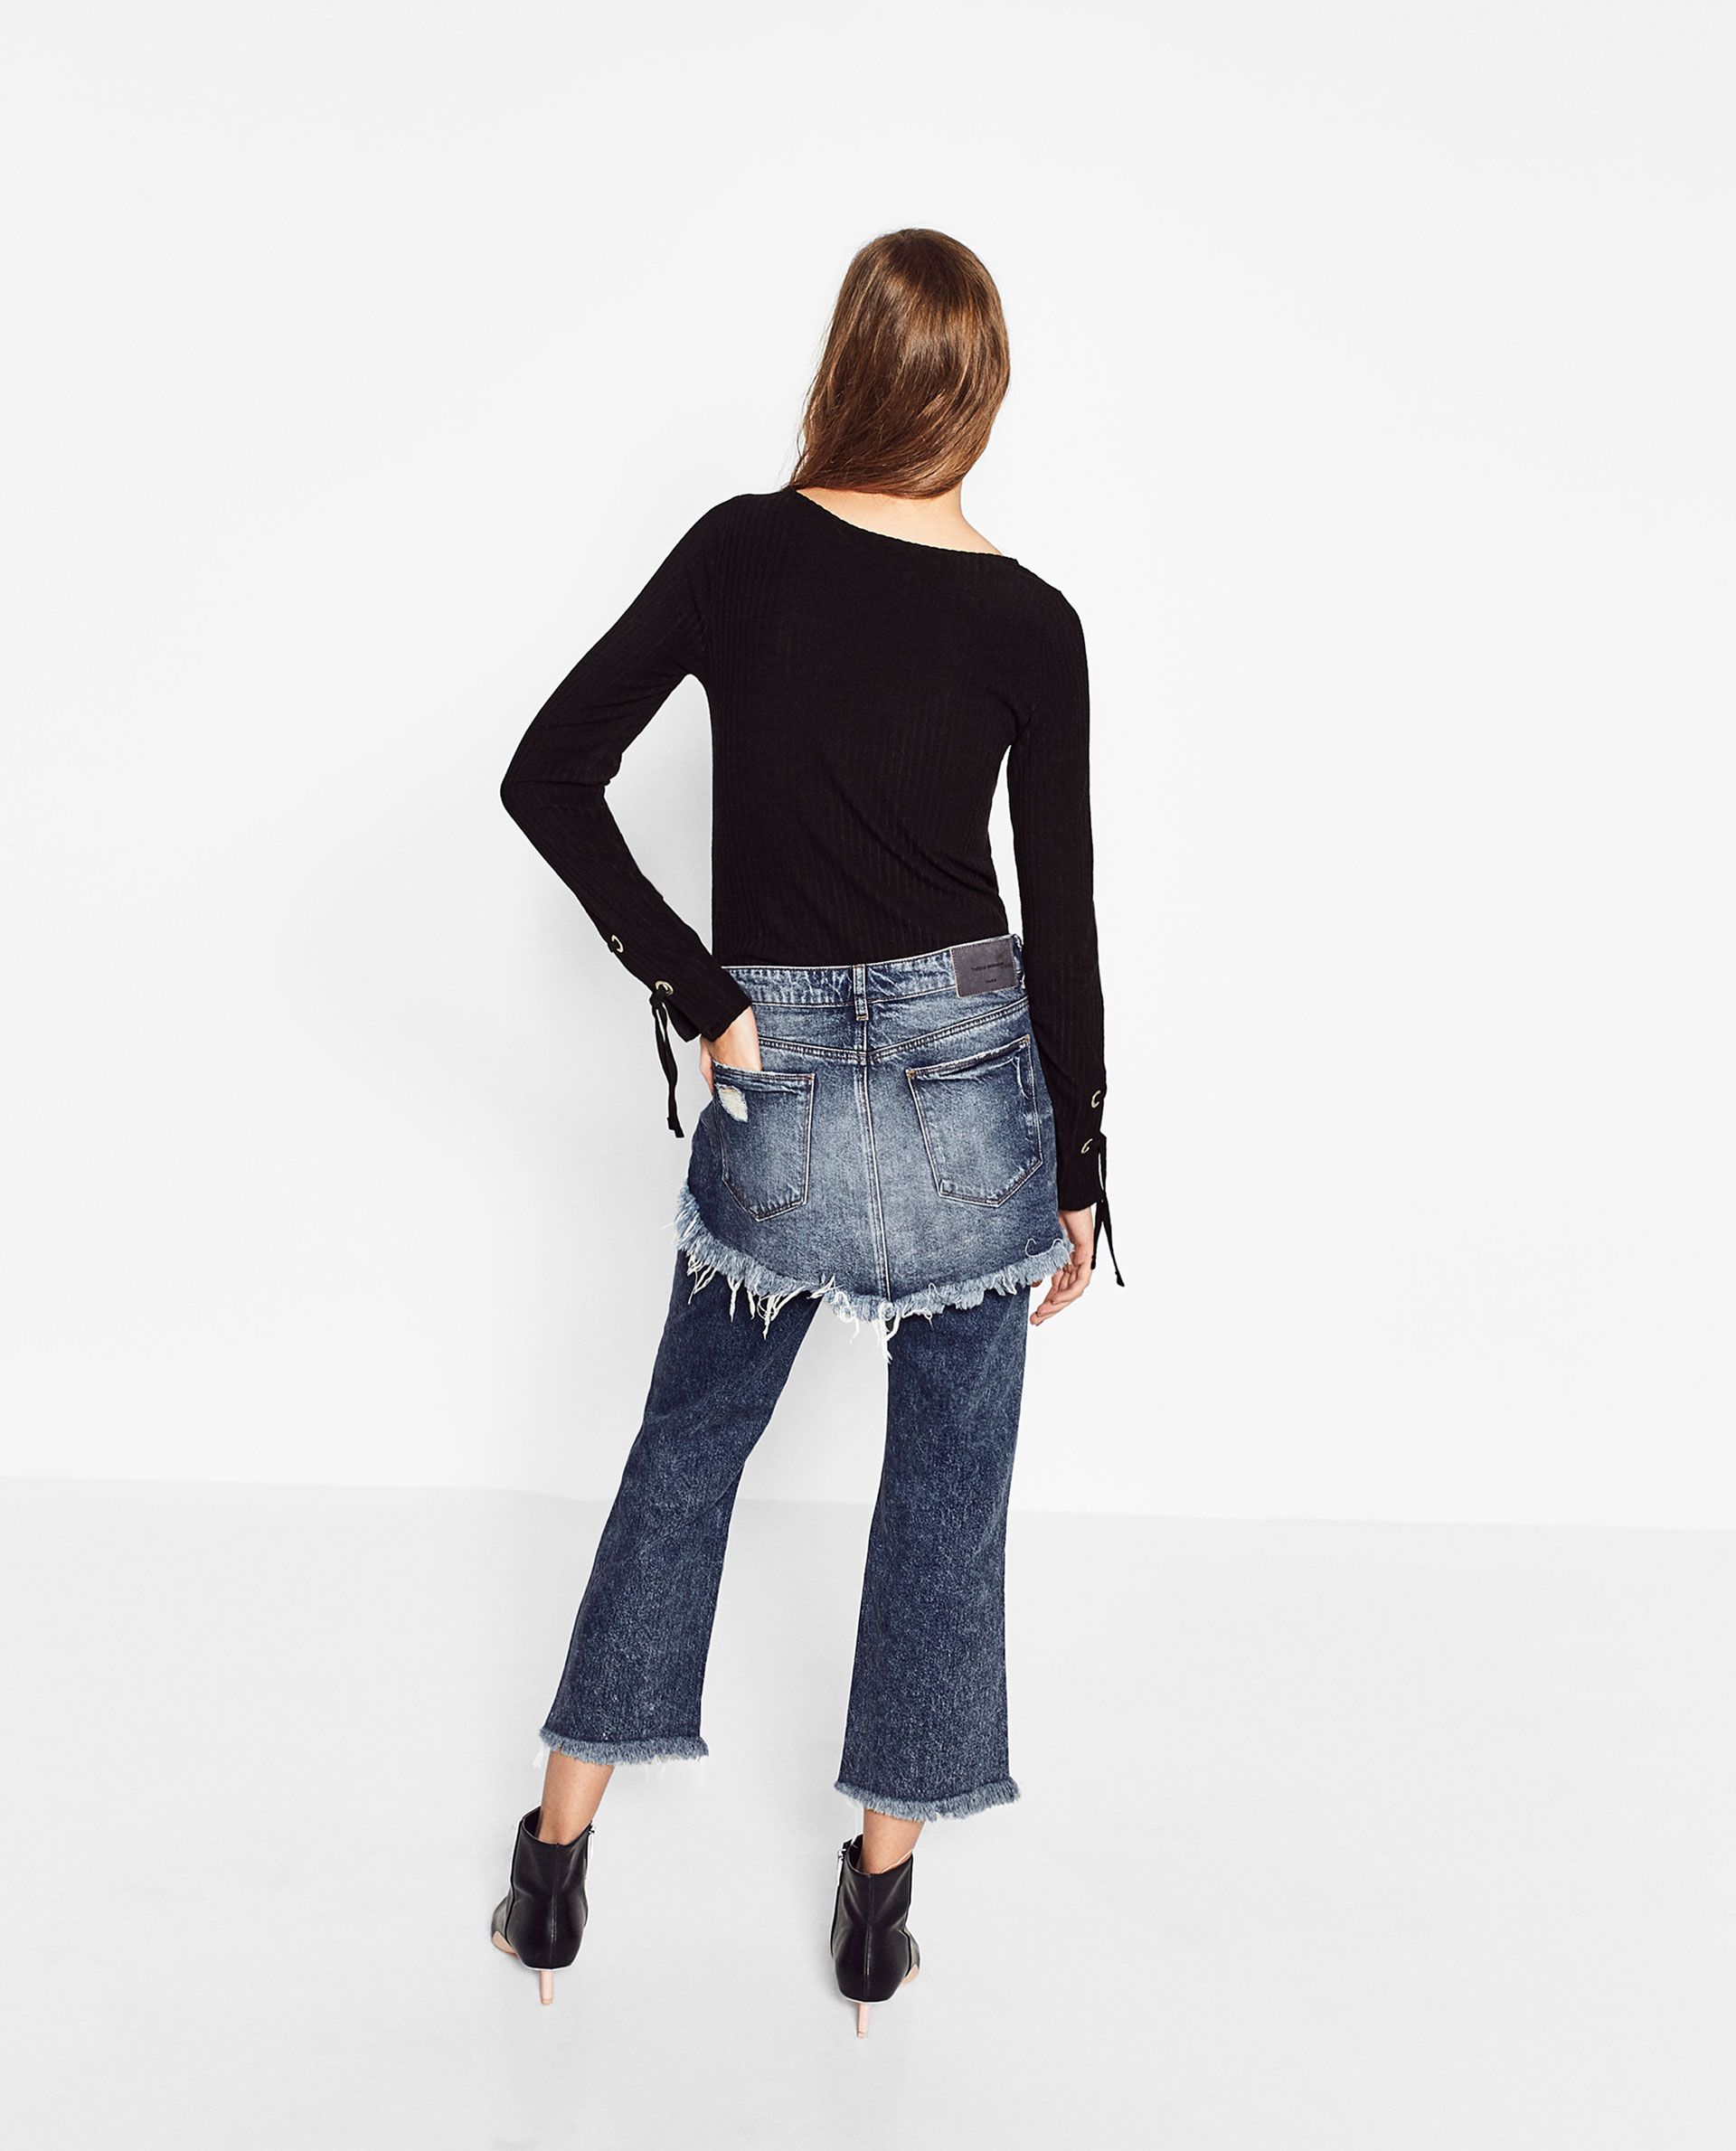 Pantalones Feos Mujer Jeans Leggins